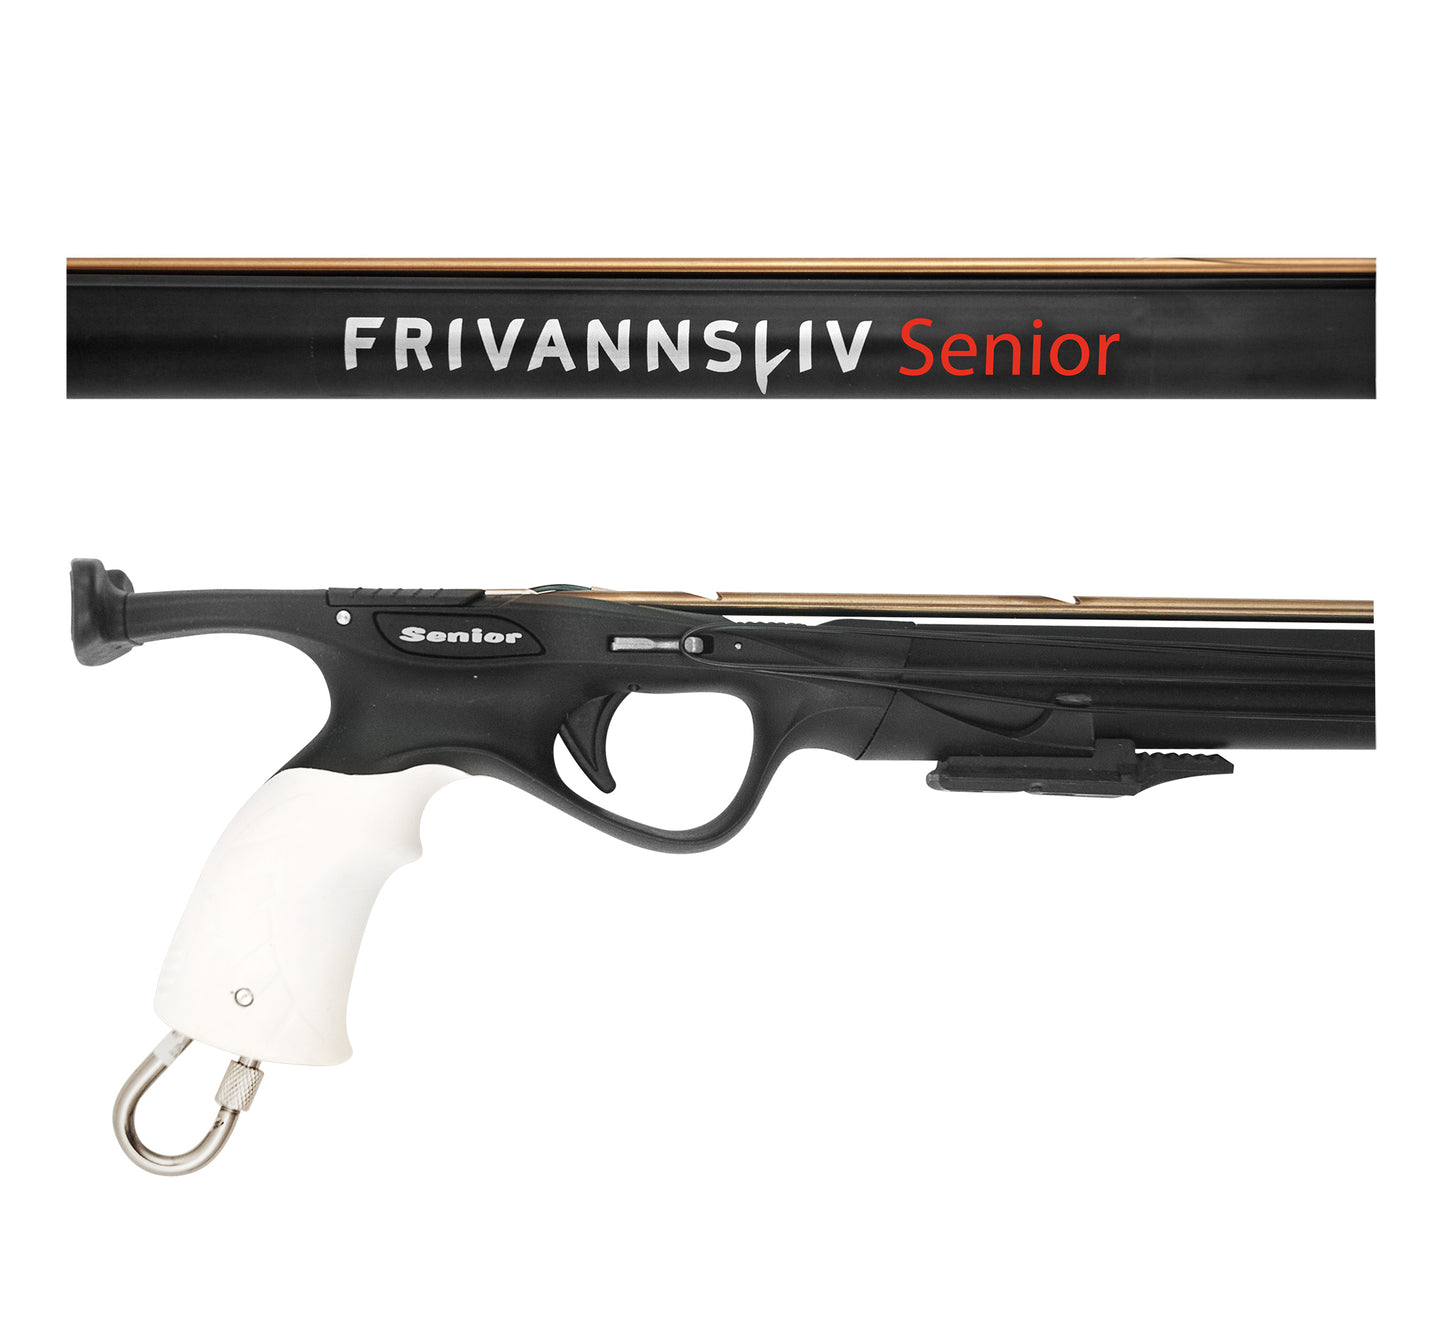 Frivannsliv® Senior harpoon